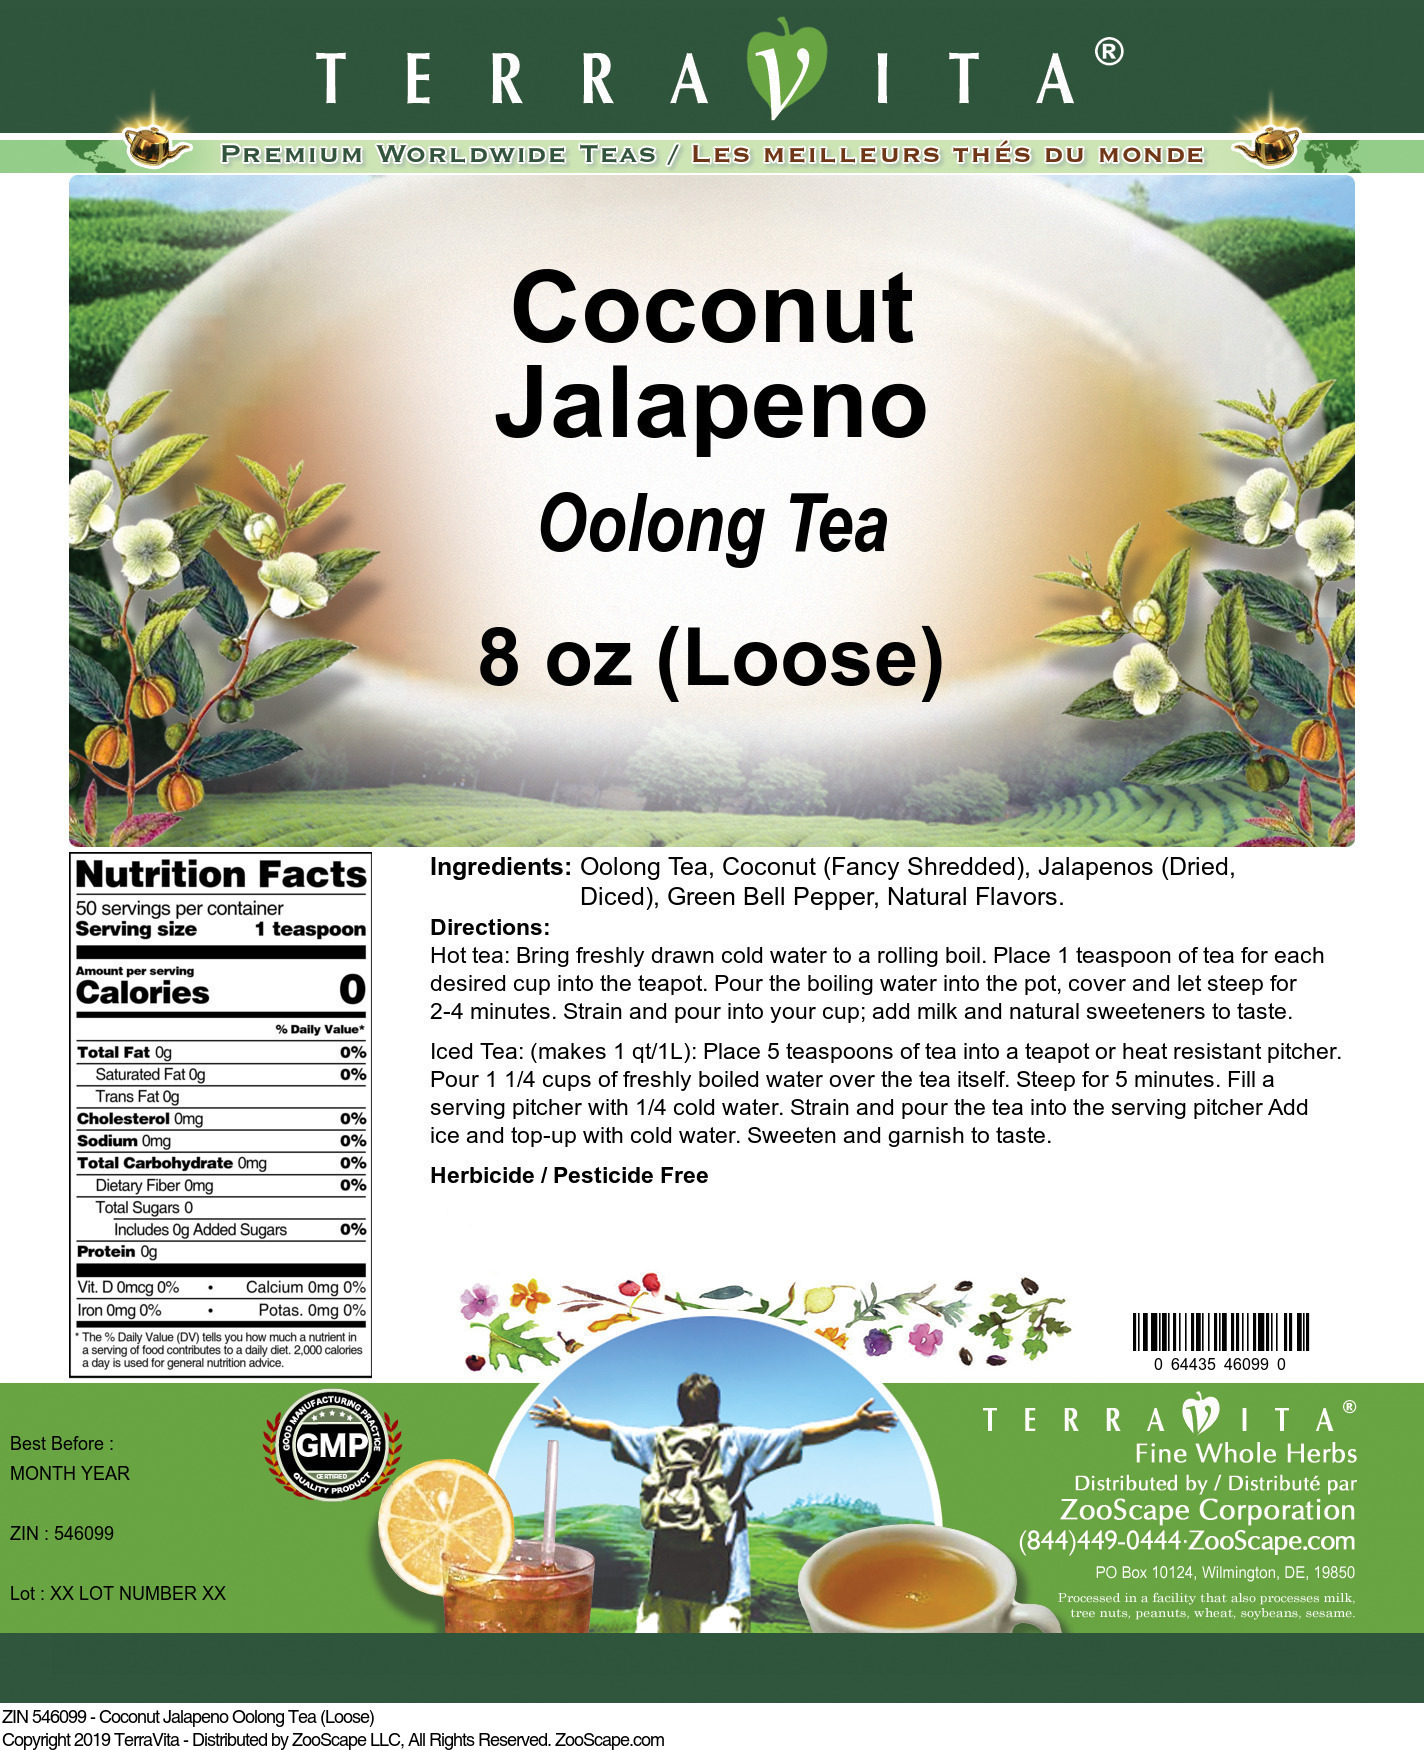 Coconut Jalapeno Oolong Tea (Loose) - Label